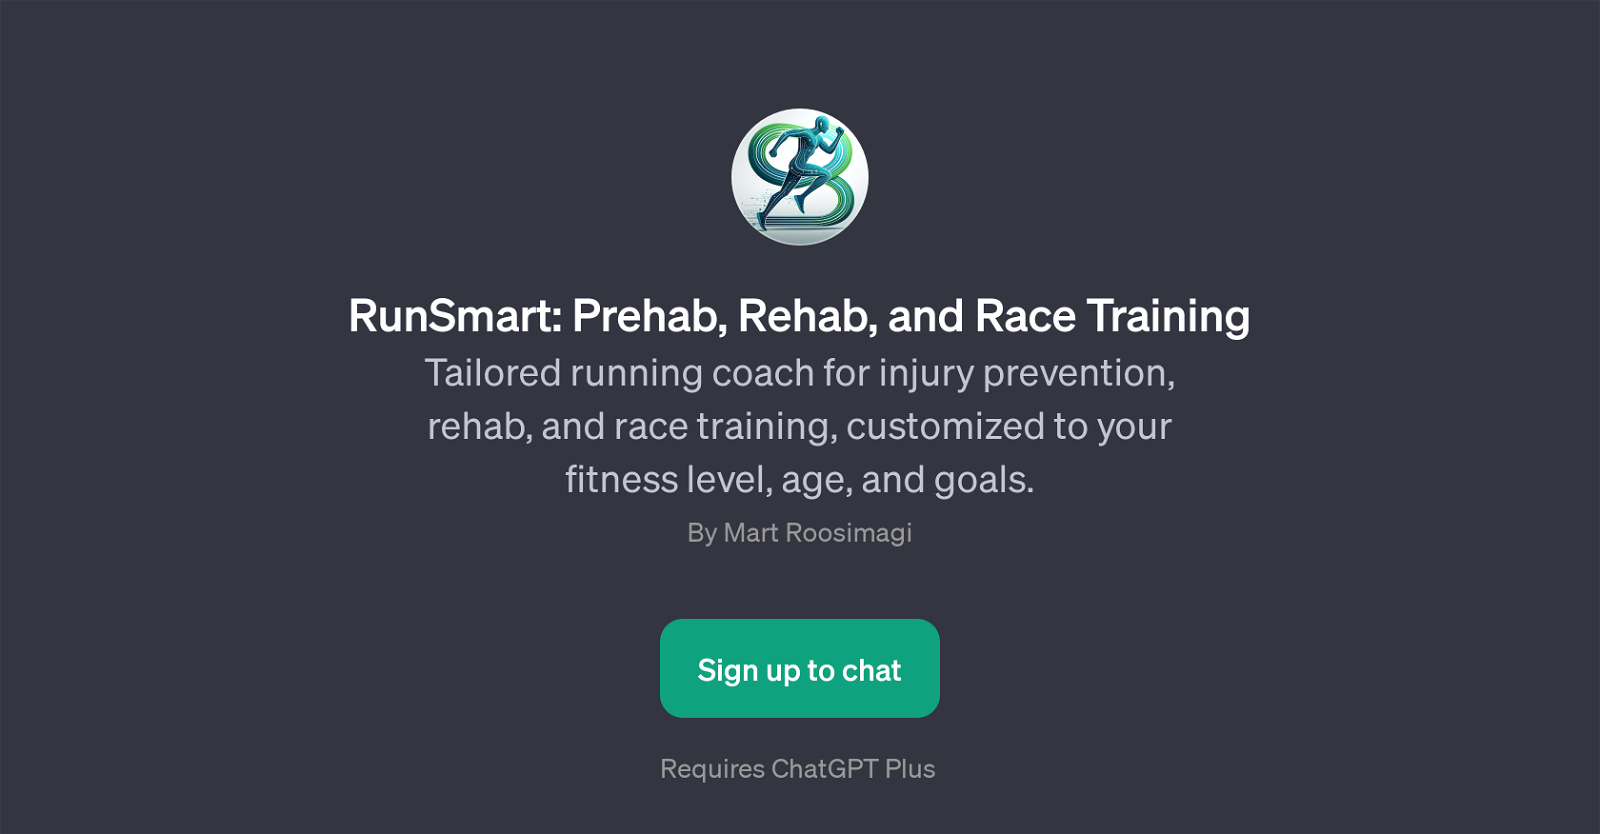 RunSmart: Prehab, Rehab, and Race Training website